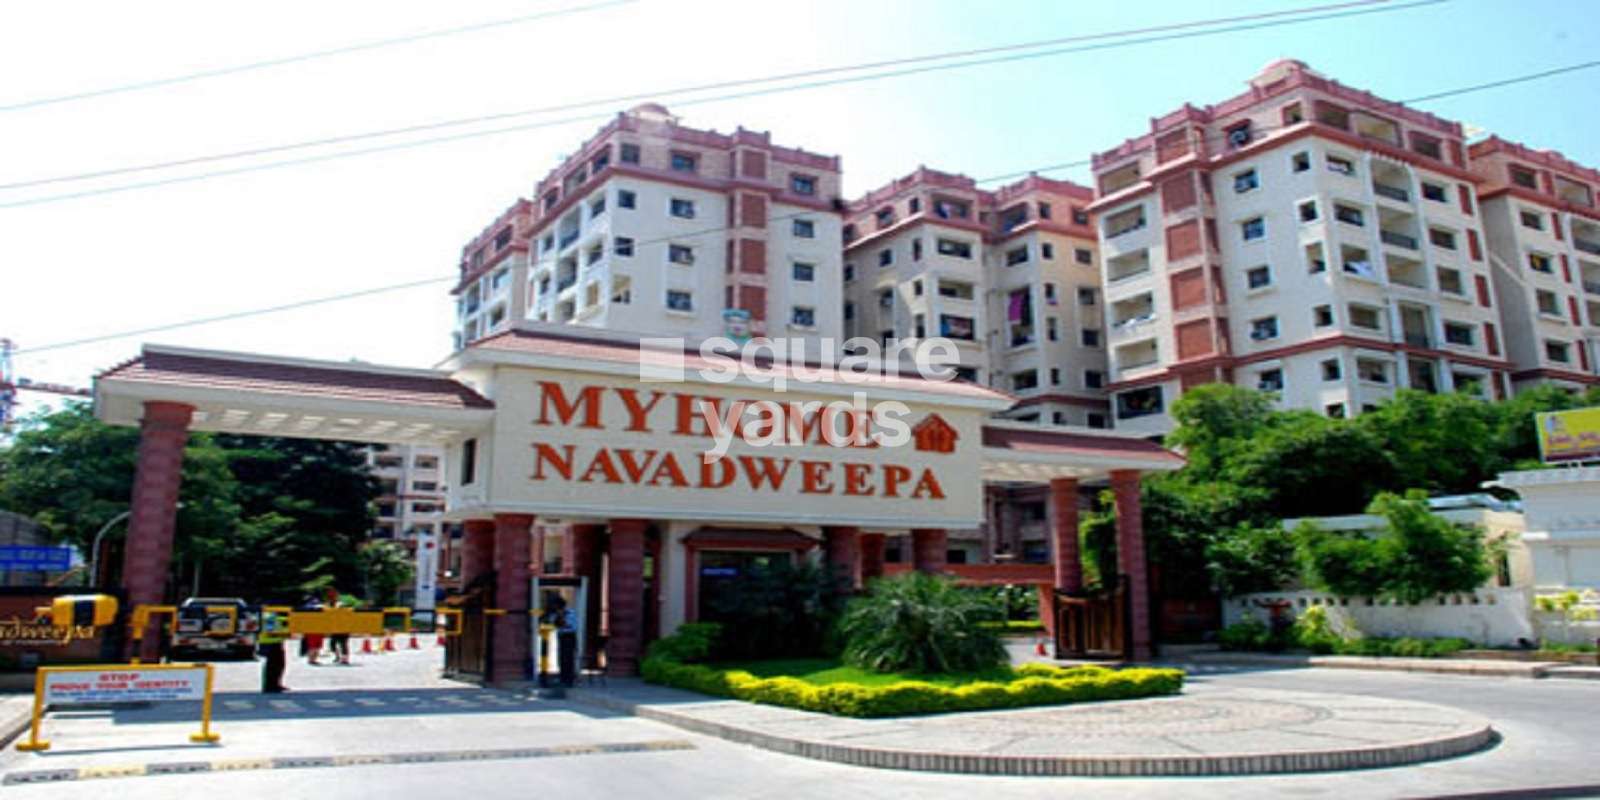 My Home Navadweepa Cover Image